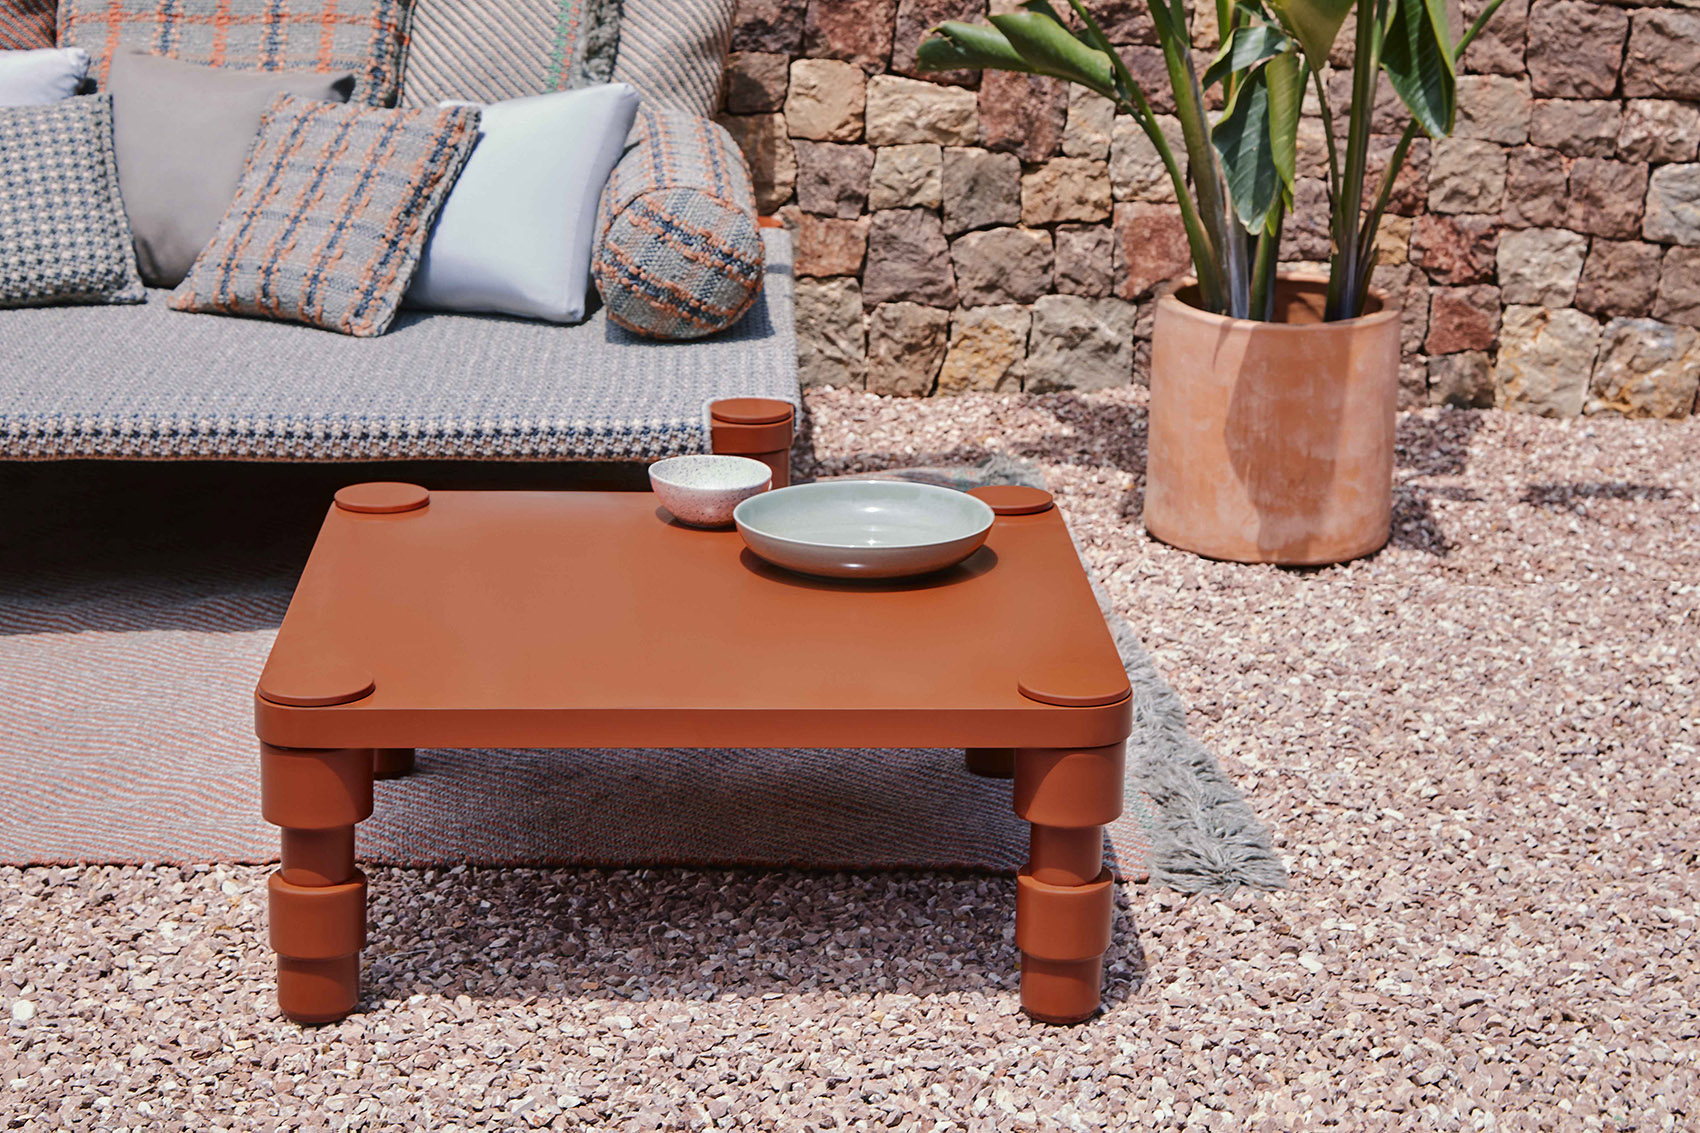 Garden Layers印度床与边桌系列/灵感源于莫卧儿帝国的古老习俗-123